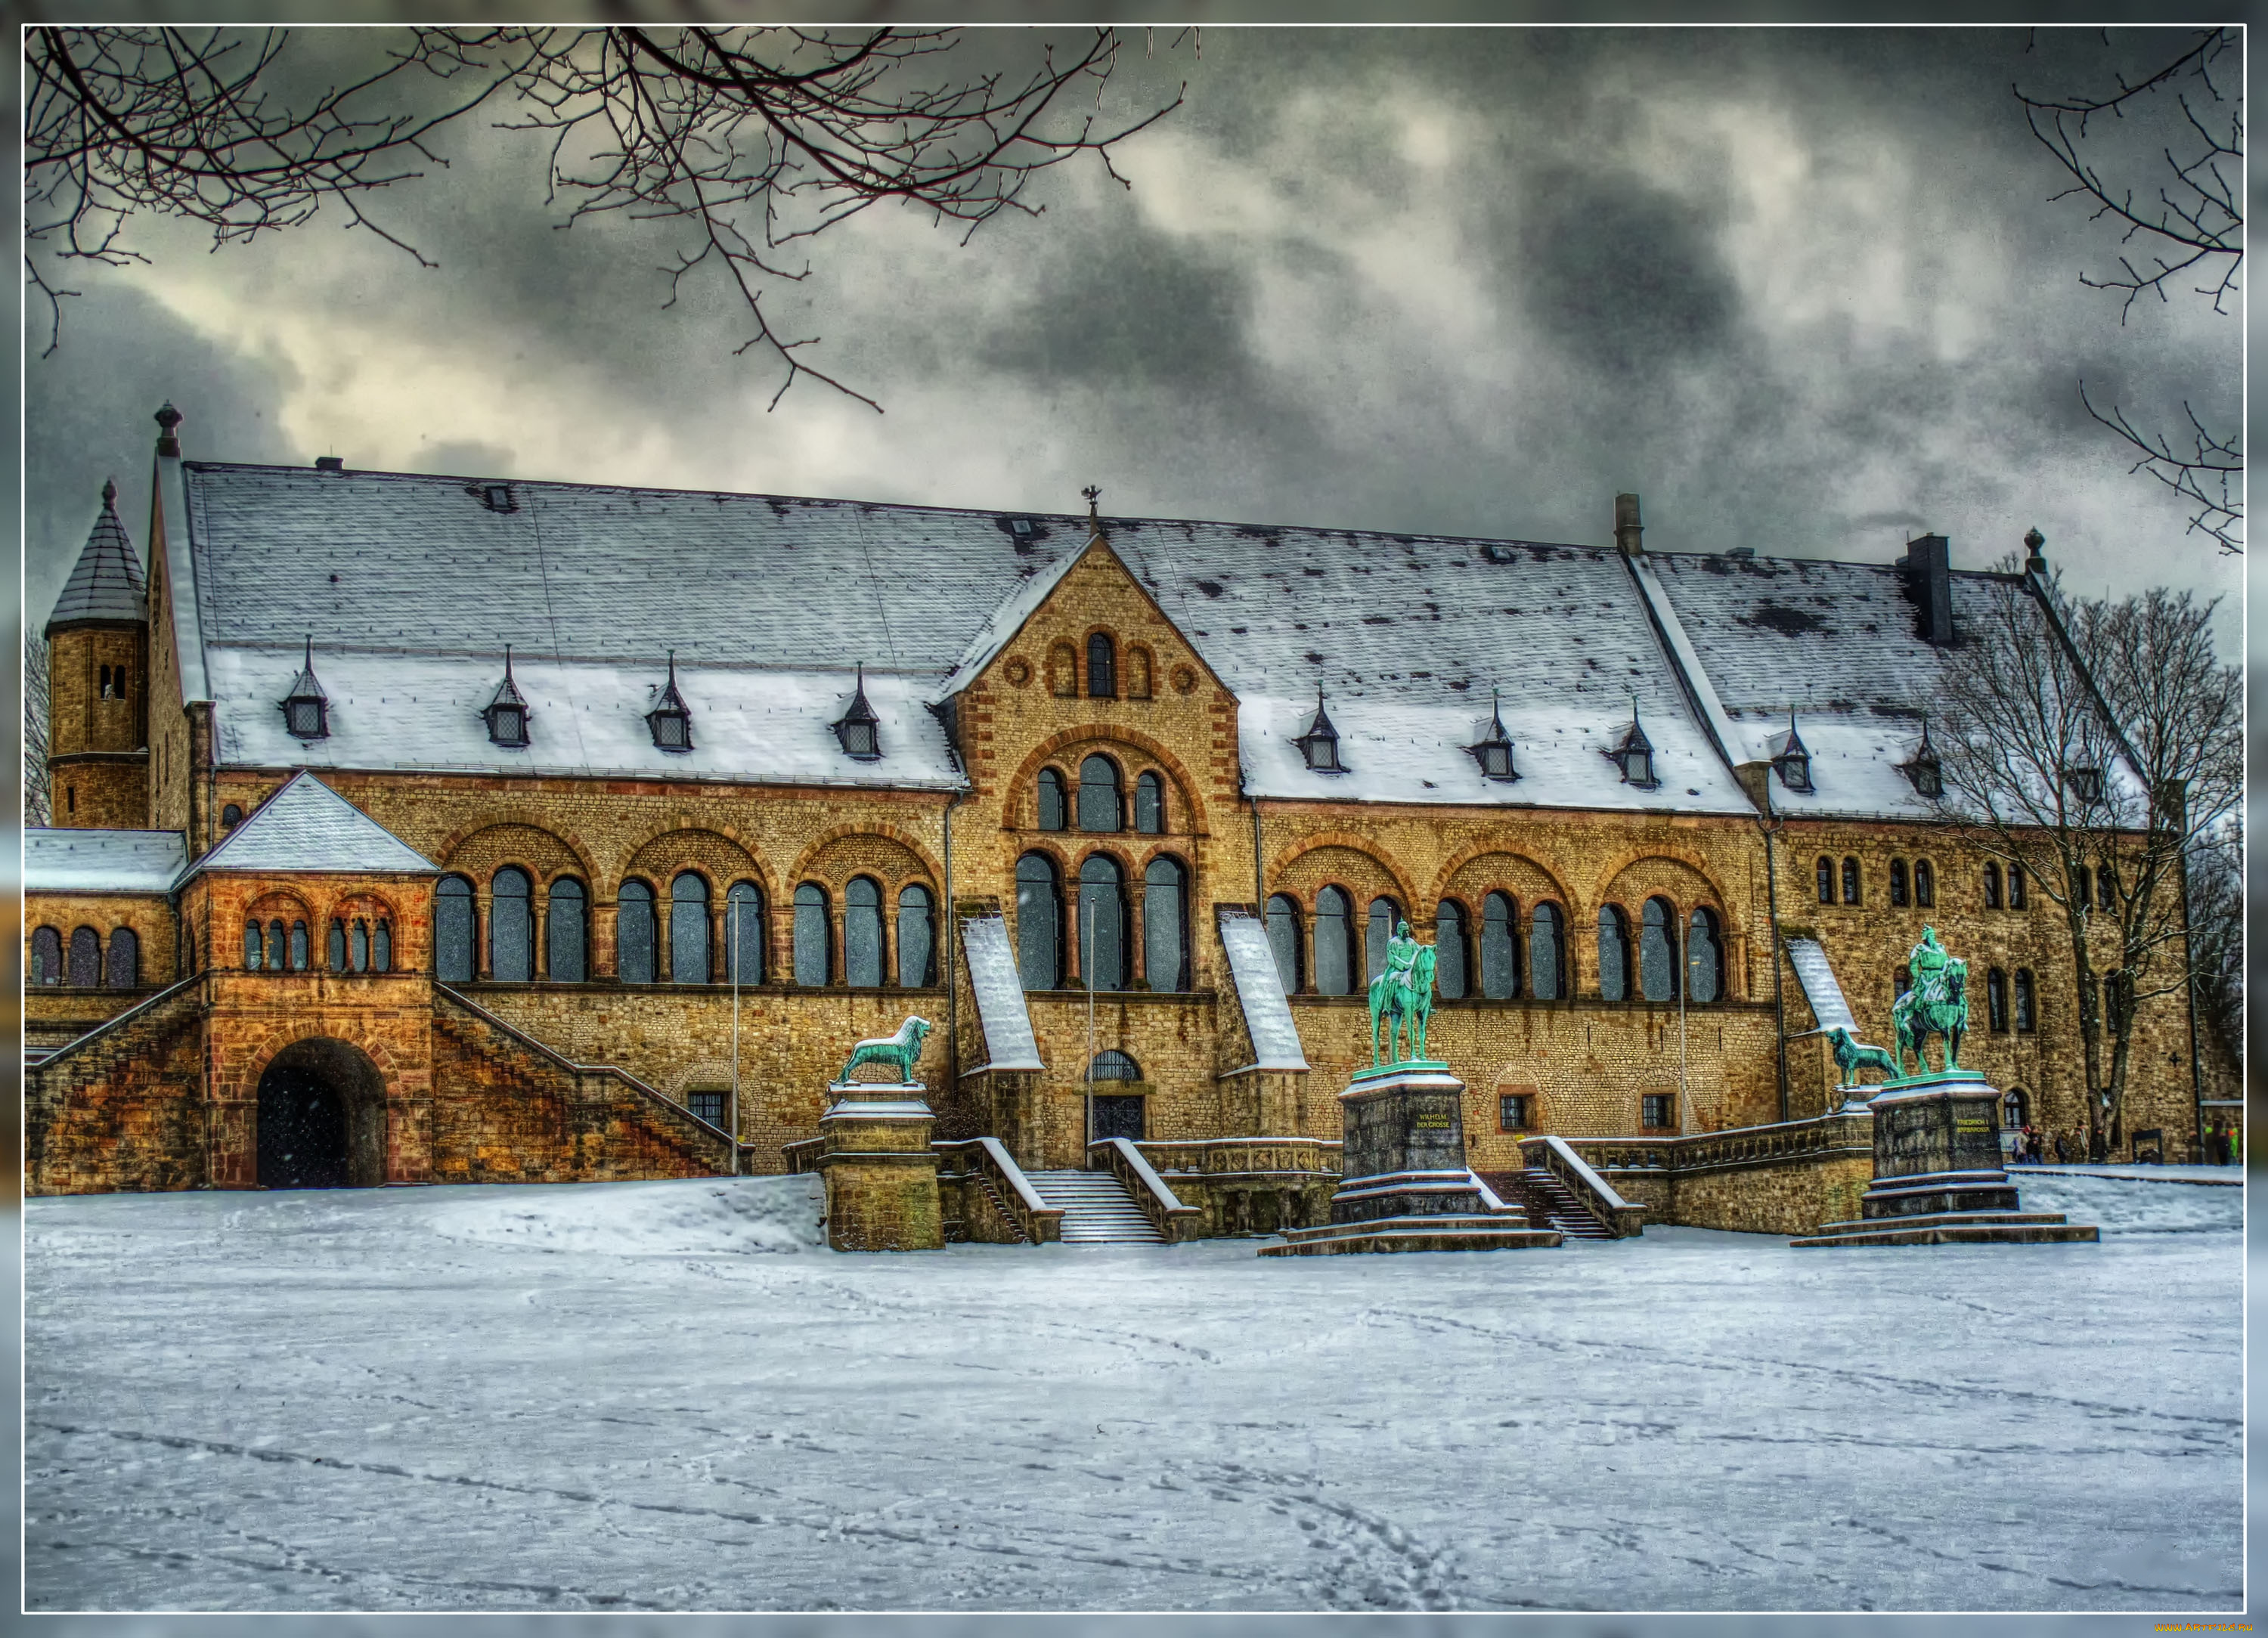 kaiserpfalz, goslar, города, дворцы, замки, крепости, статуи, зима, снег, тучи, замок